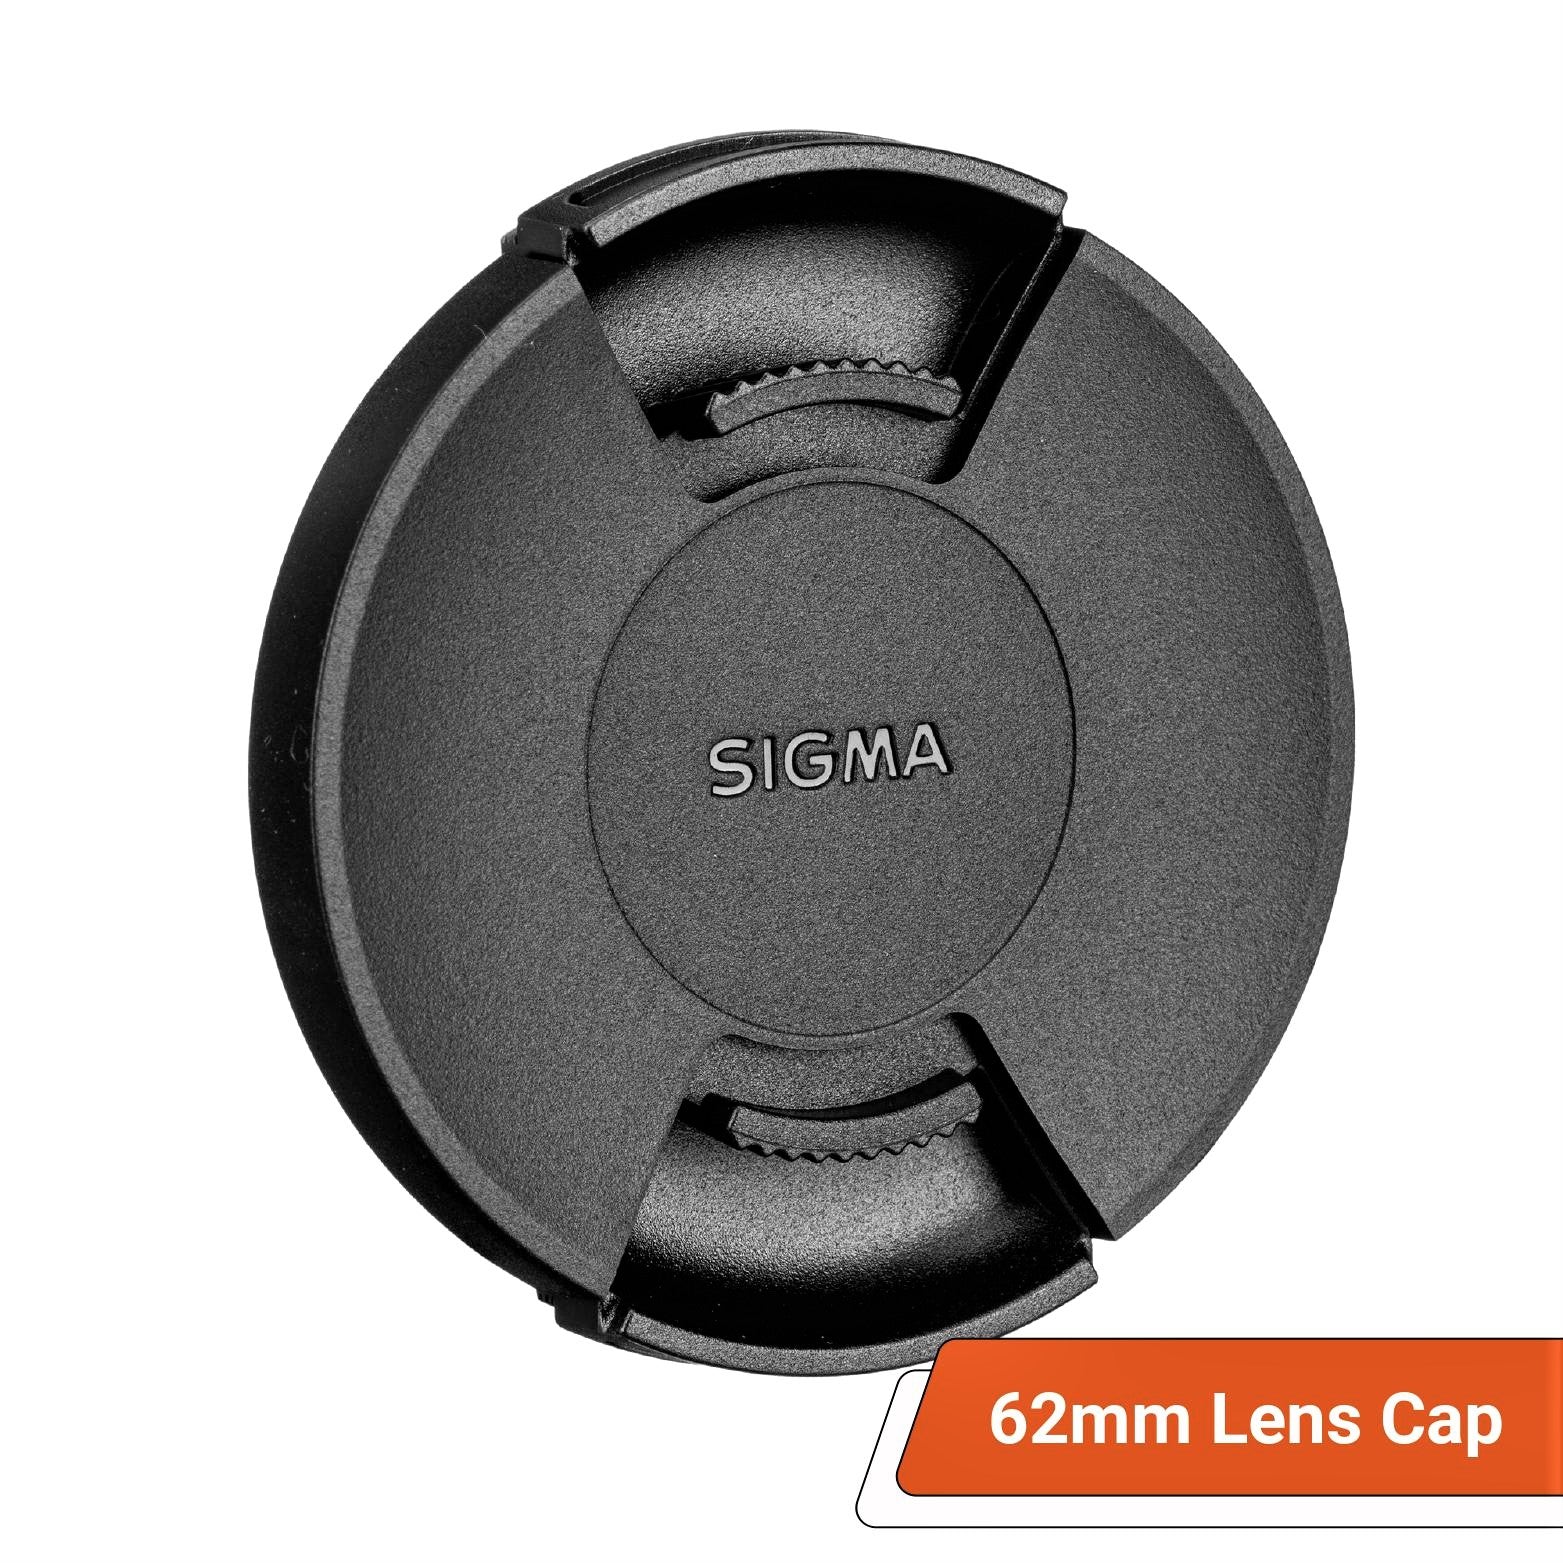 Sigma LCF-62 III 62mm Lens Cap